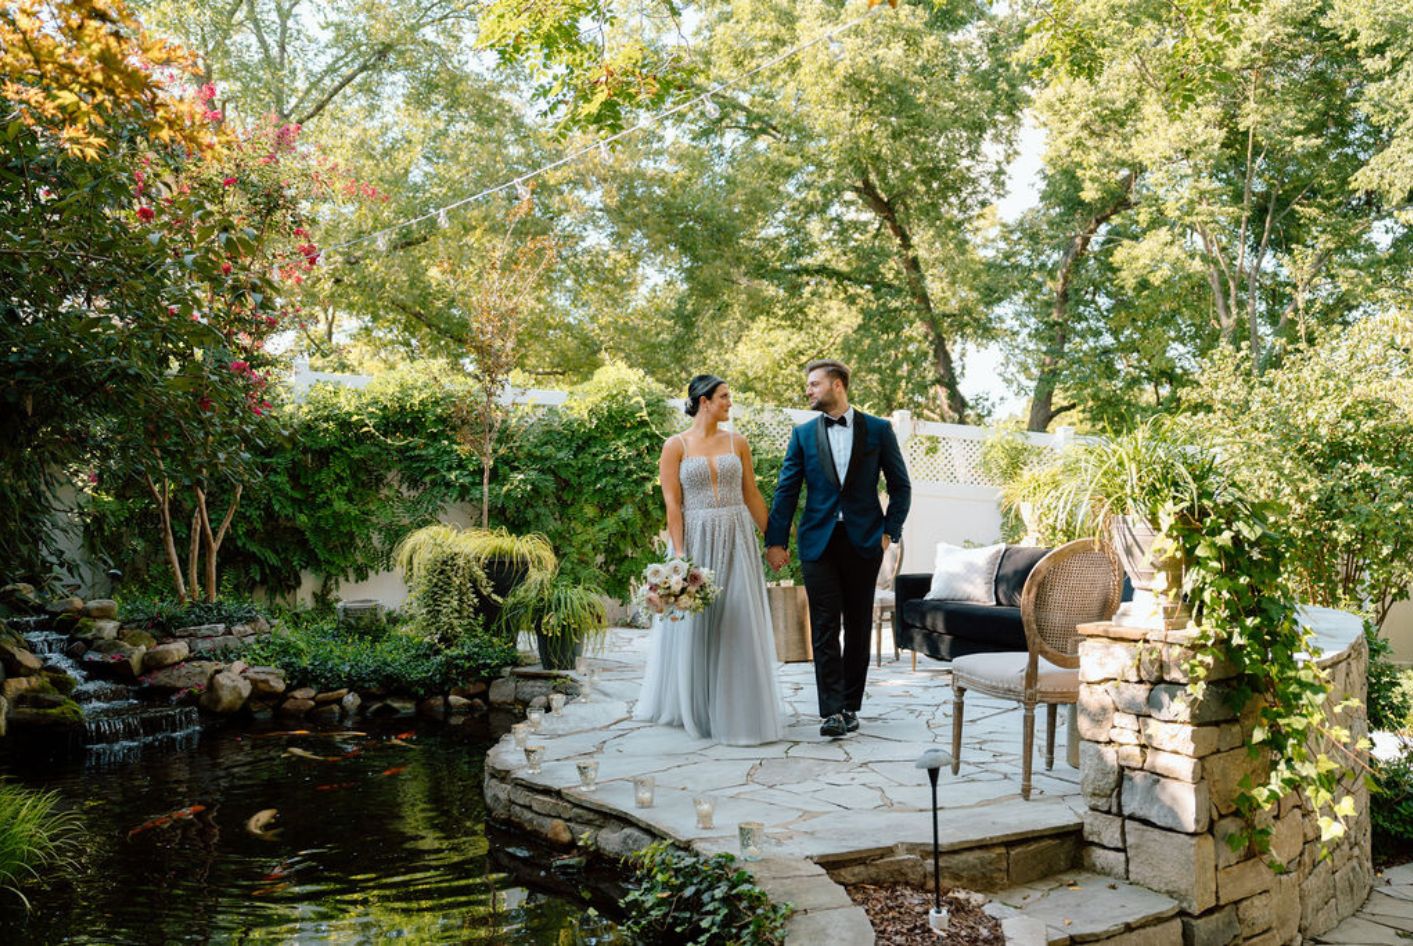 An Enchanted Summer Garden Wedding | September 9